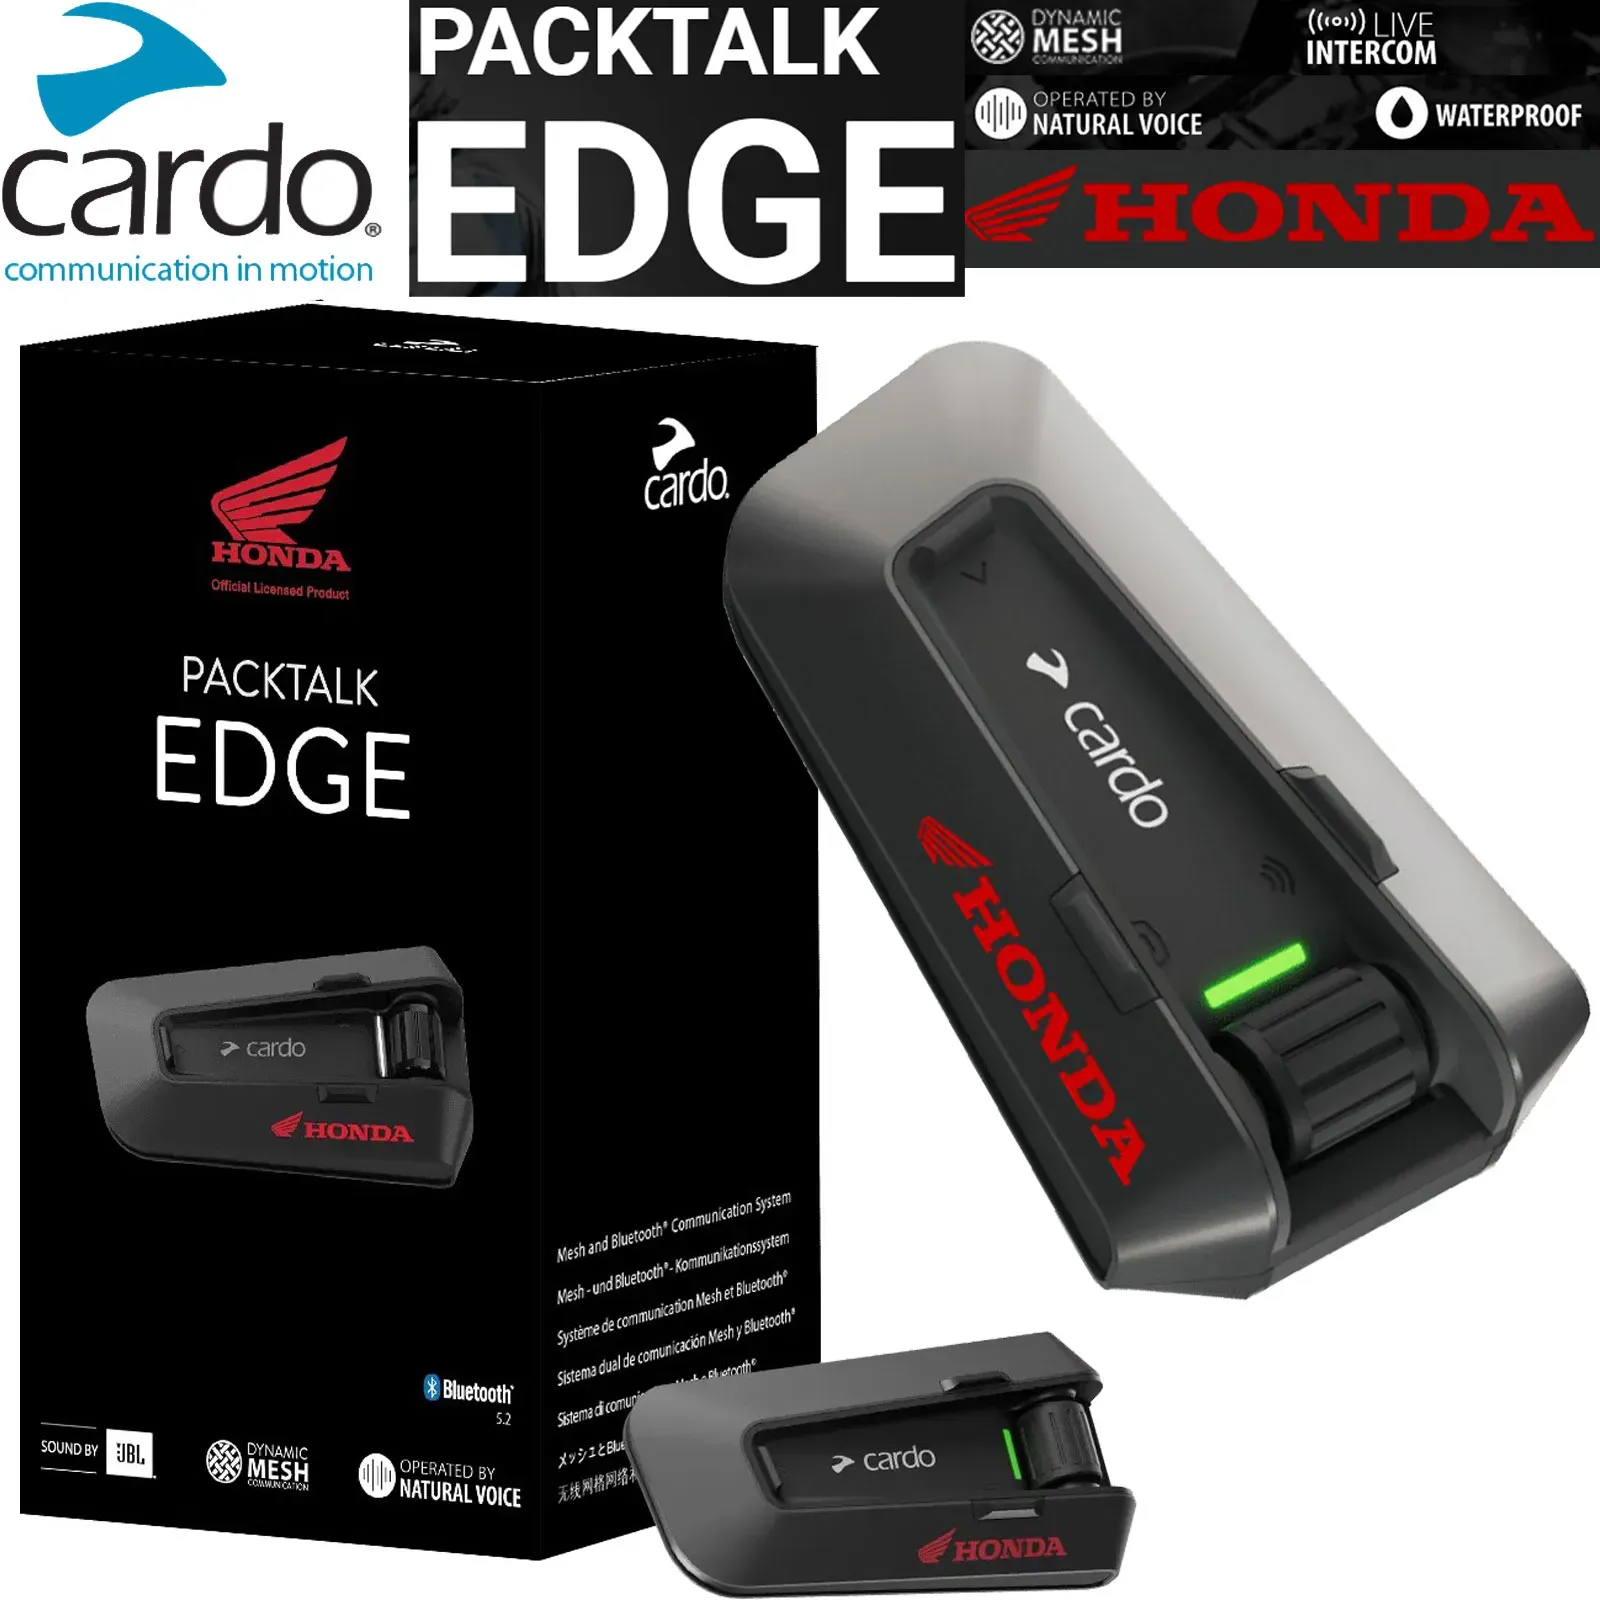 Cardo Packtalk Edge HONDA EDITION Einzelset Motorrad-Headset Bluetooth 5.2 Dynamic Mesh Intercom wasserdicht mit Sound by JBL